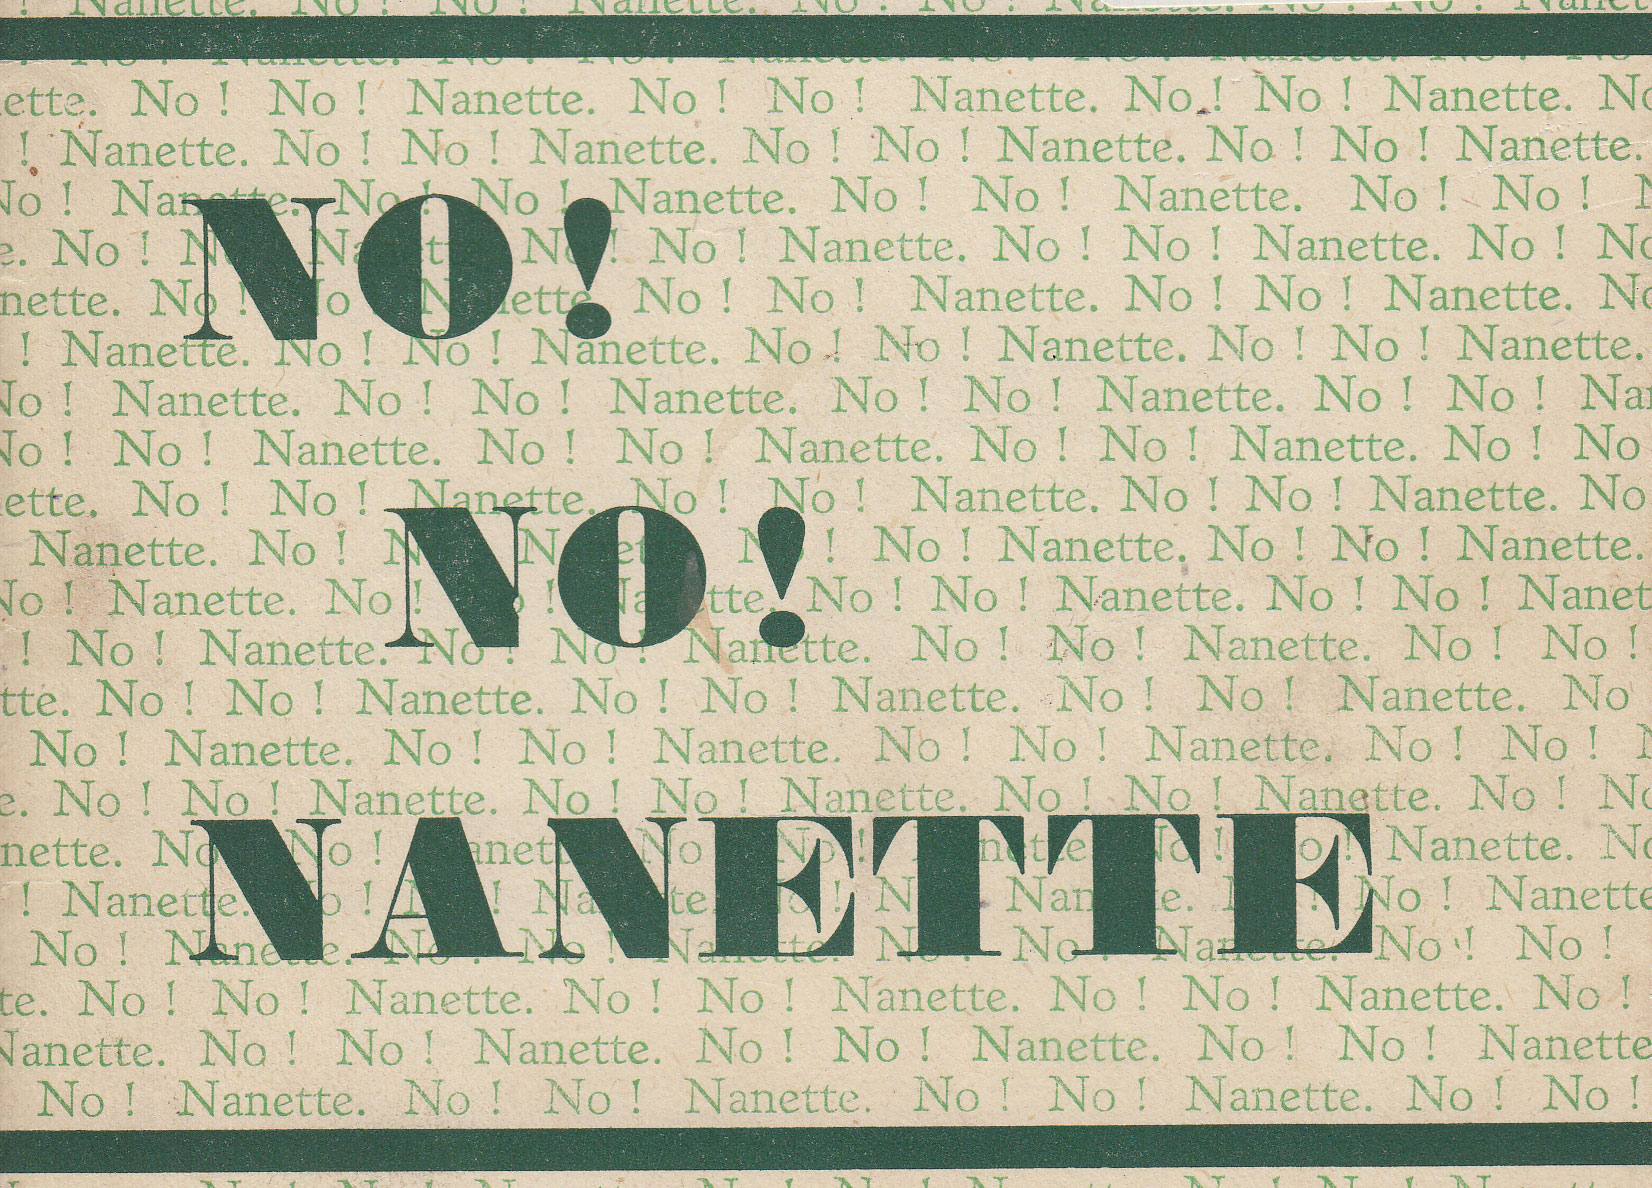 No! No! Nanette (1948)